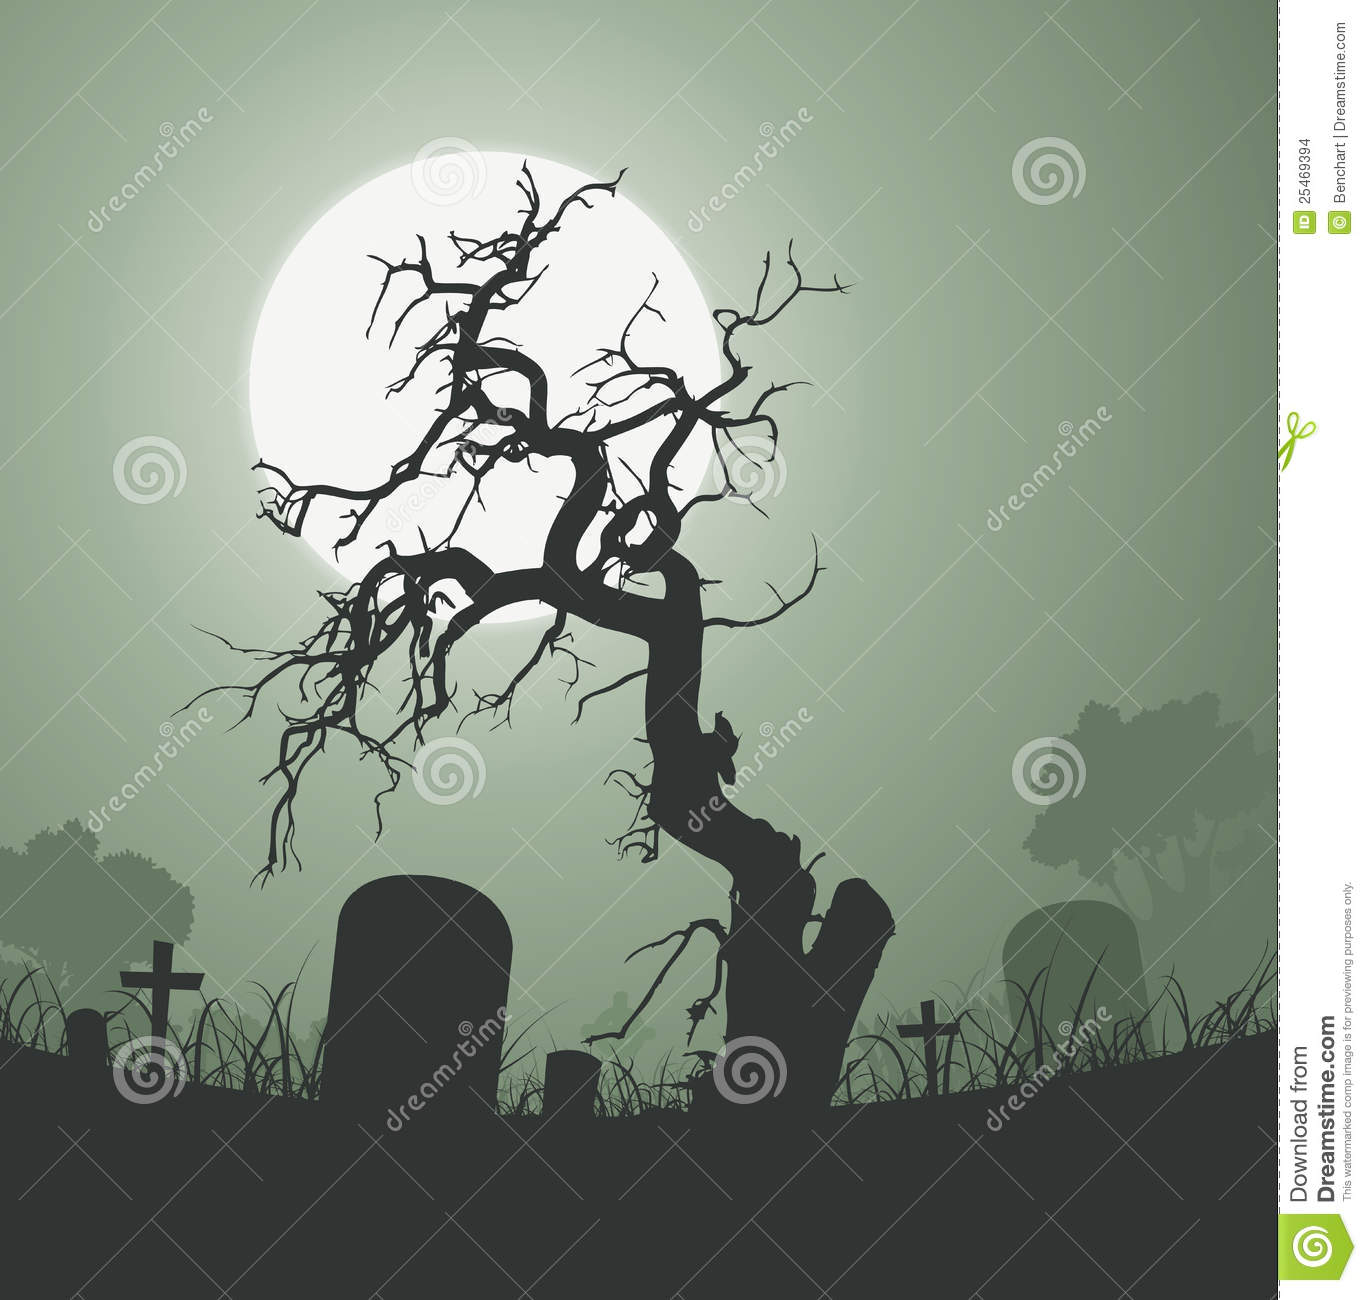 Halloween Spooky Dead Tree In Graveyard Stock Images   Image  25469394